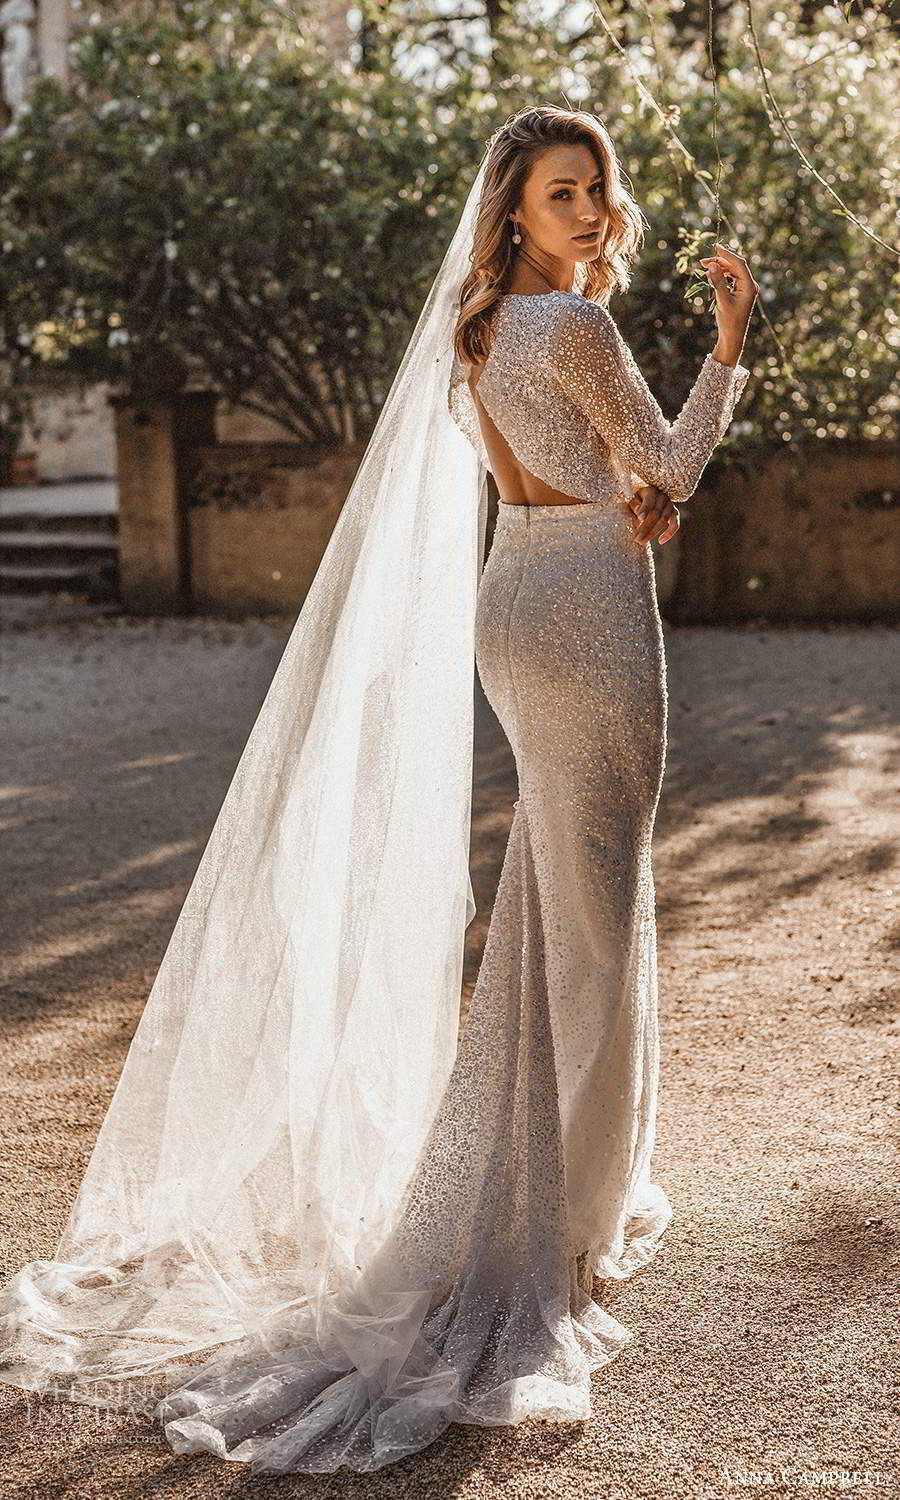 anna campbell 2021 bridal long sleeve bateau neckline embellished crop top sheath skirt 2 piece wedding dress sweep train (10) bv